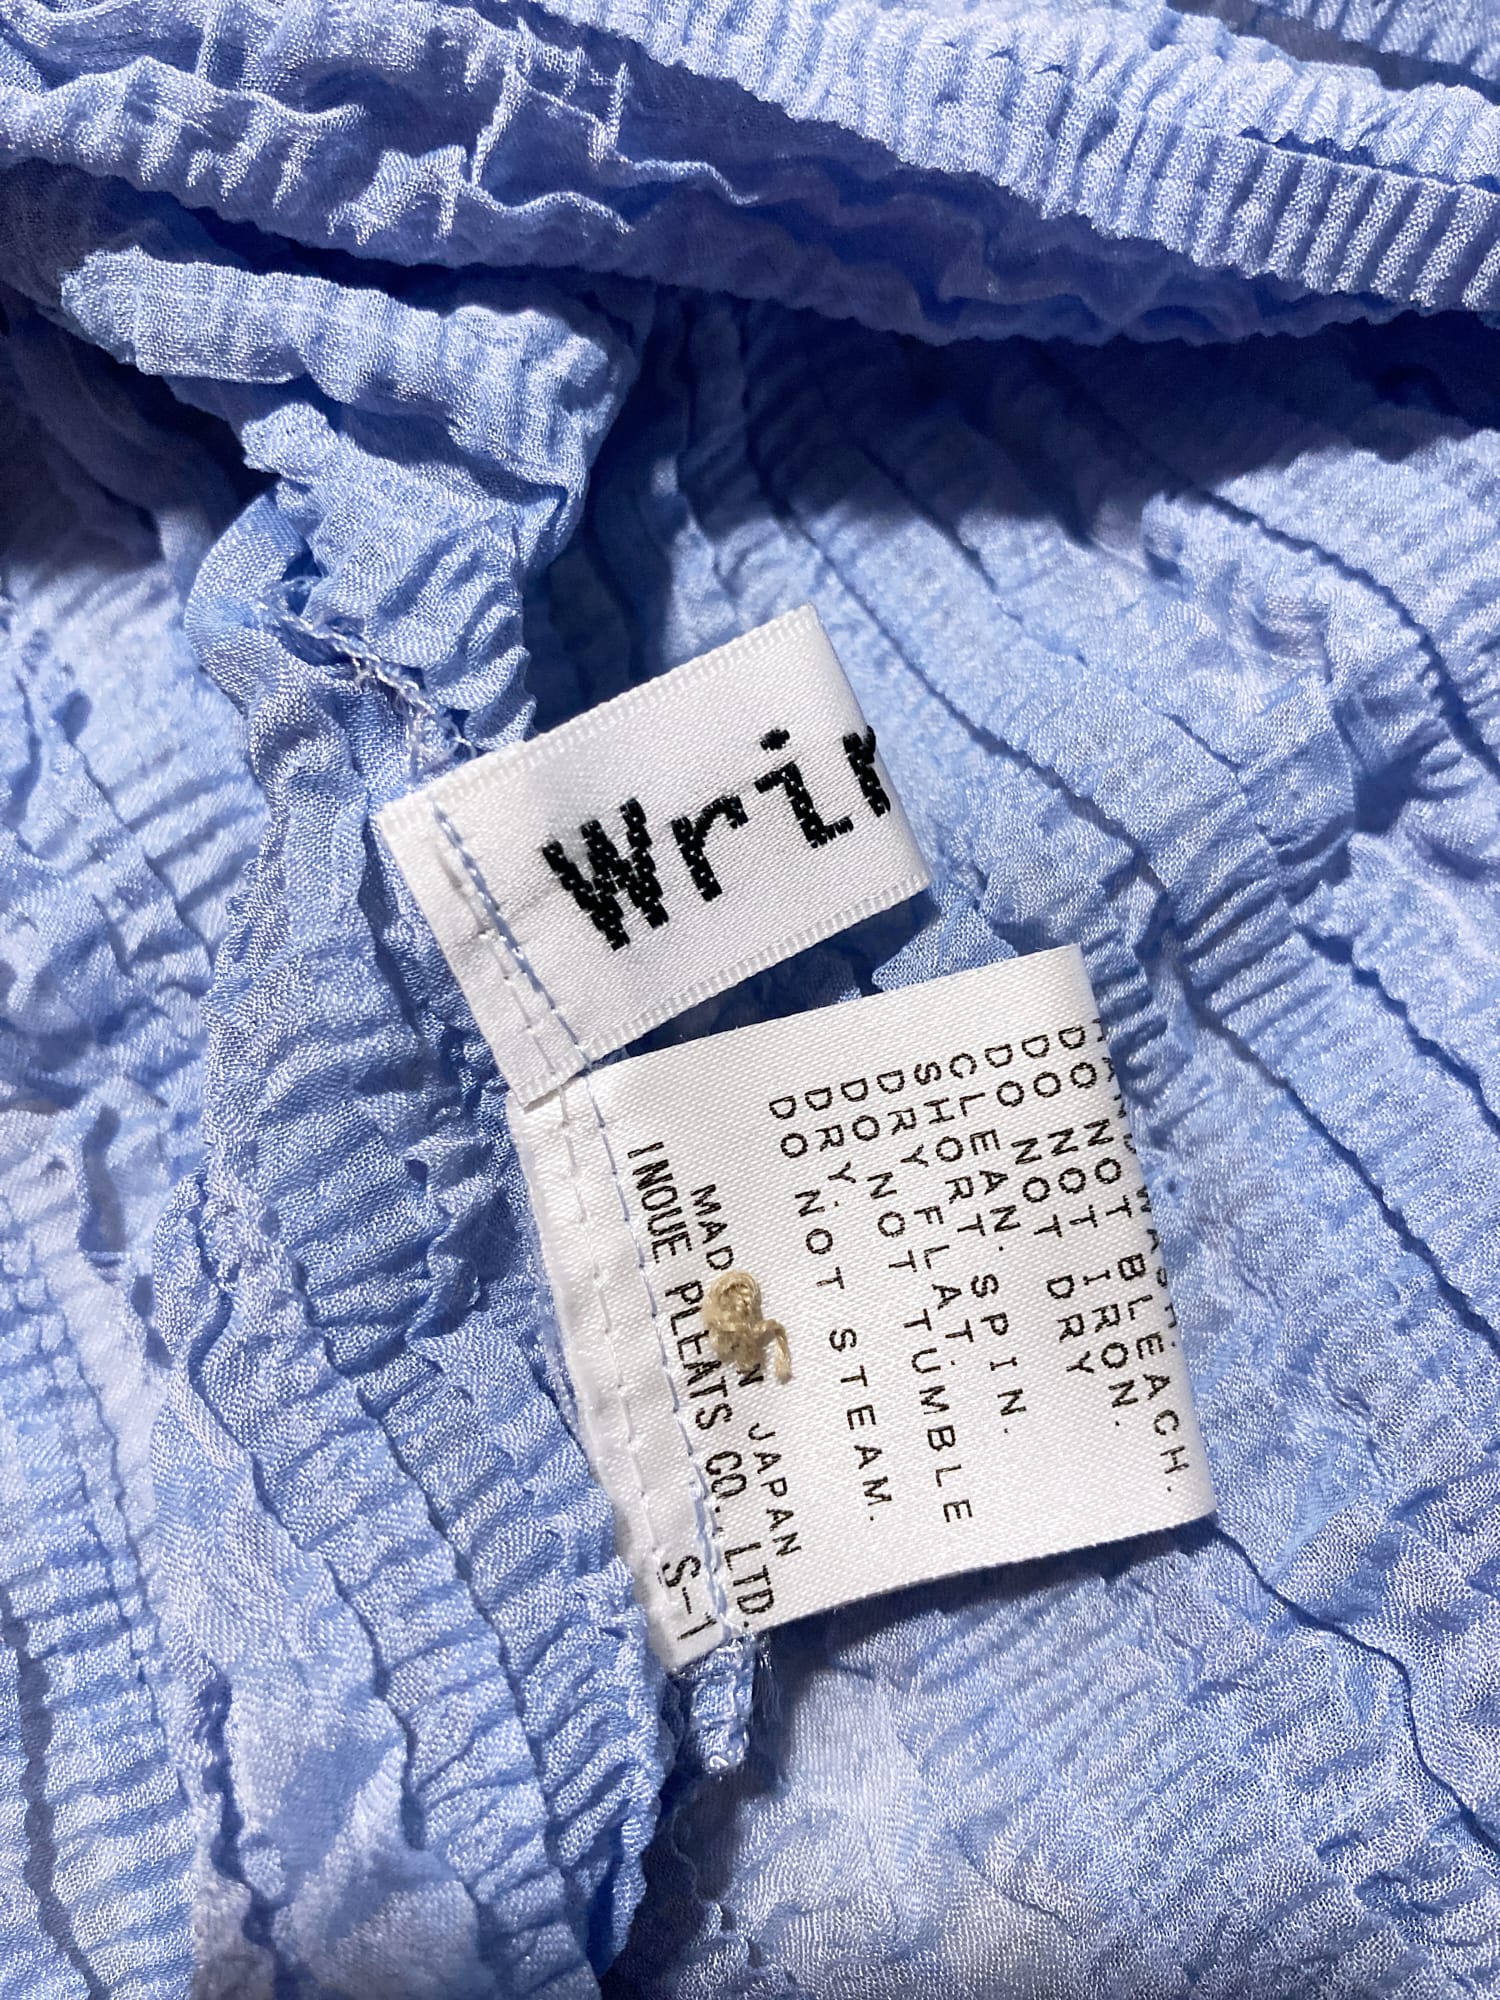 Wrinqle Inoue Pleats sheer pale blue wrinkled polyester cardigan